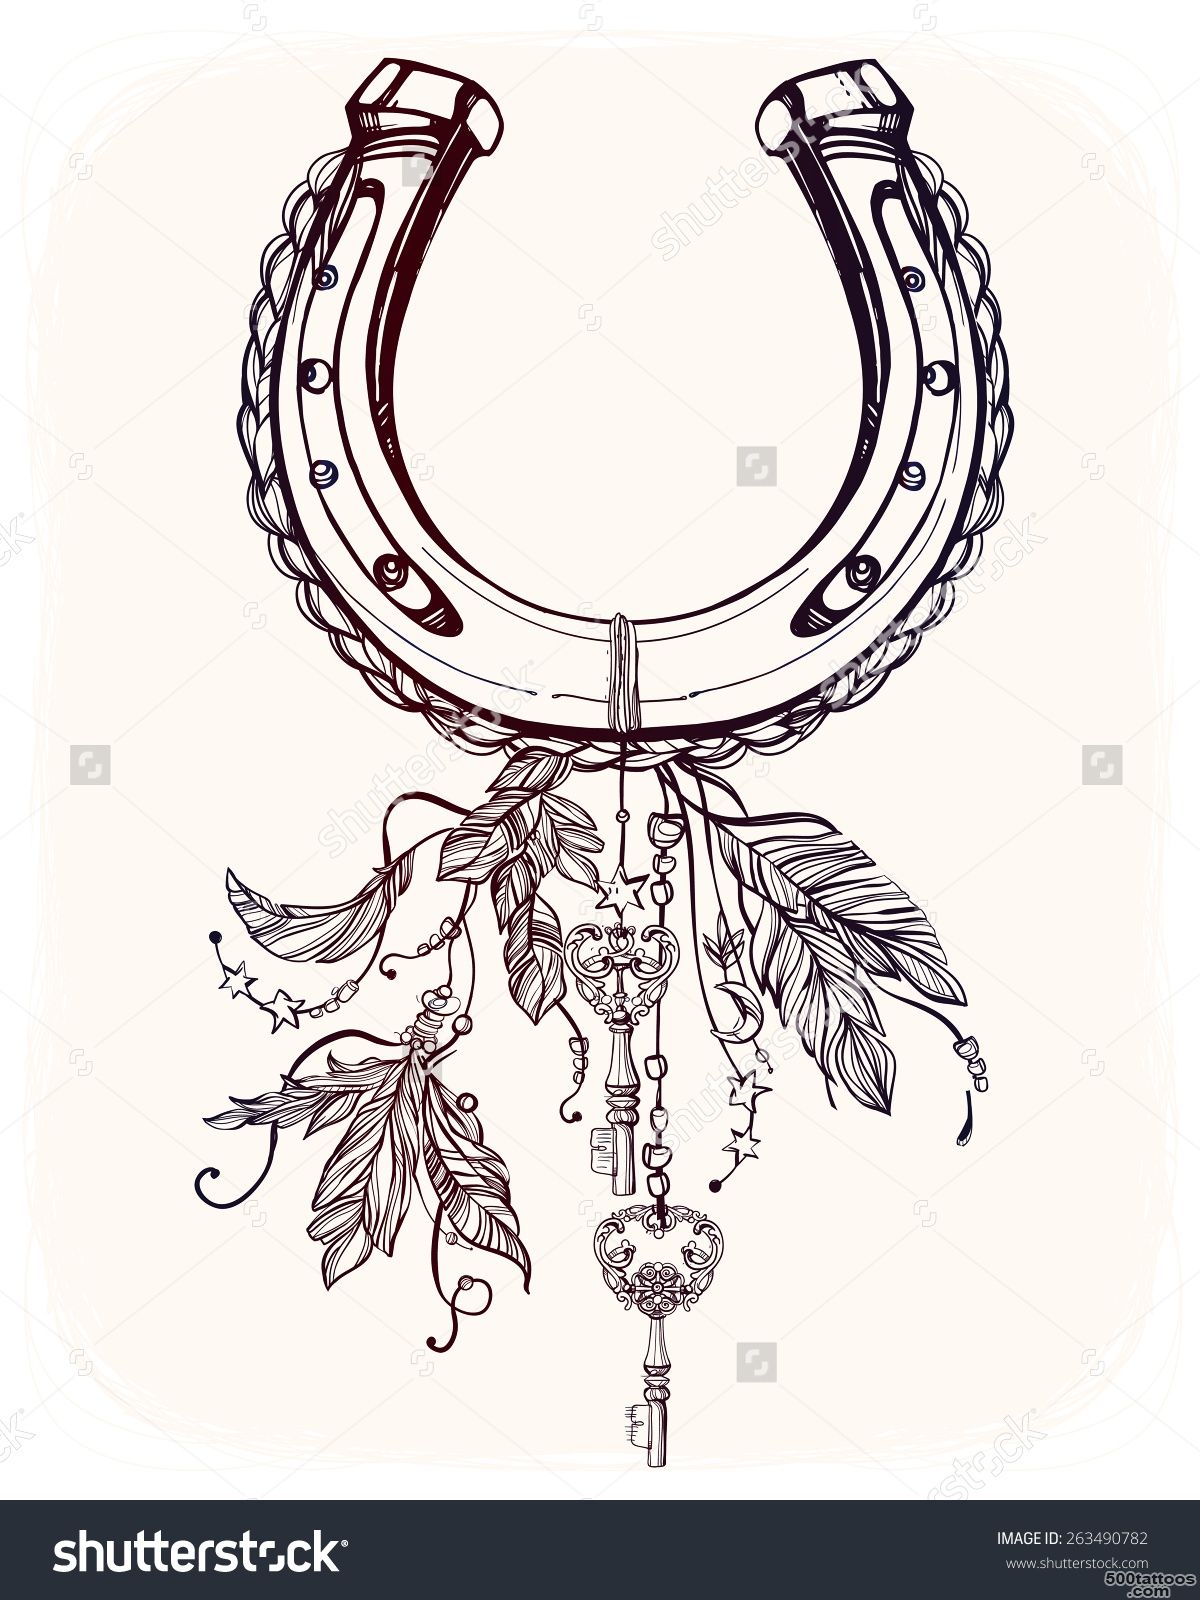 Elegant Good Luck Horseshoe Amulet Charm With Feathers And Stars ..._29